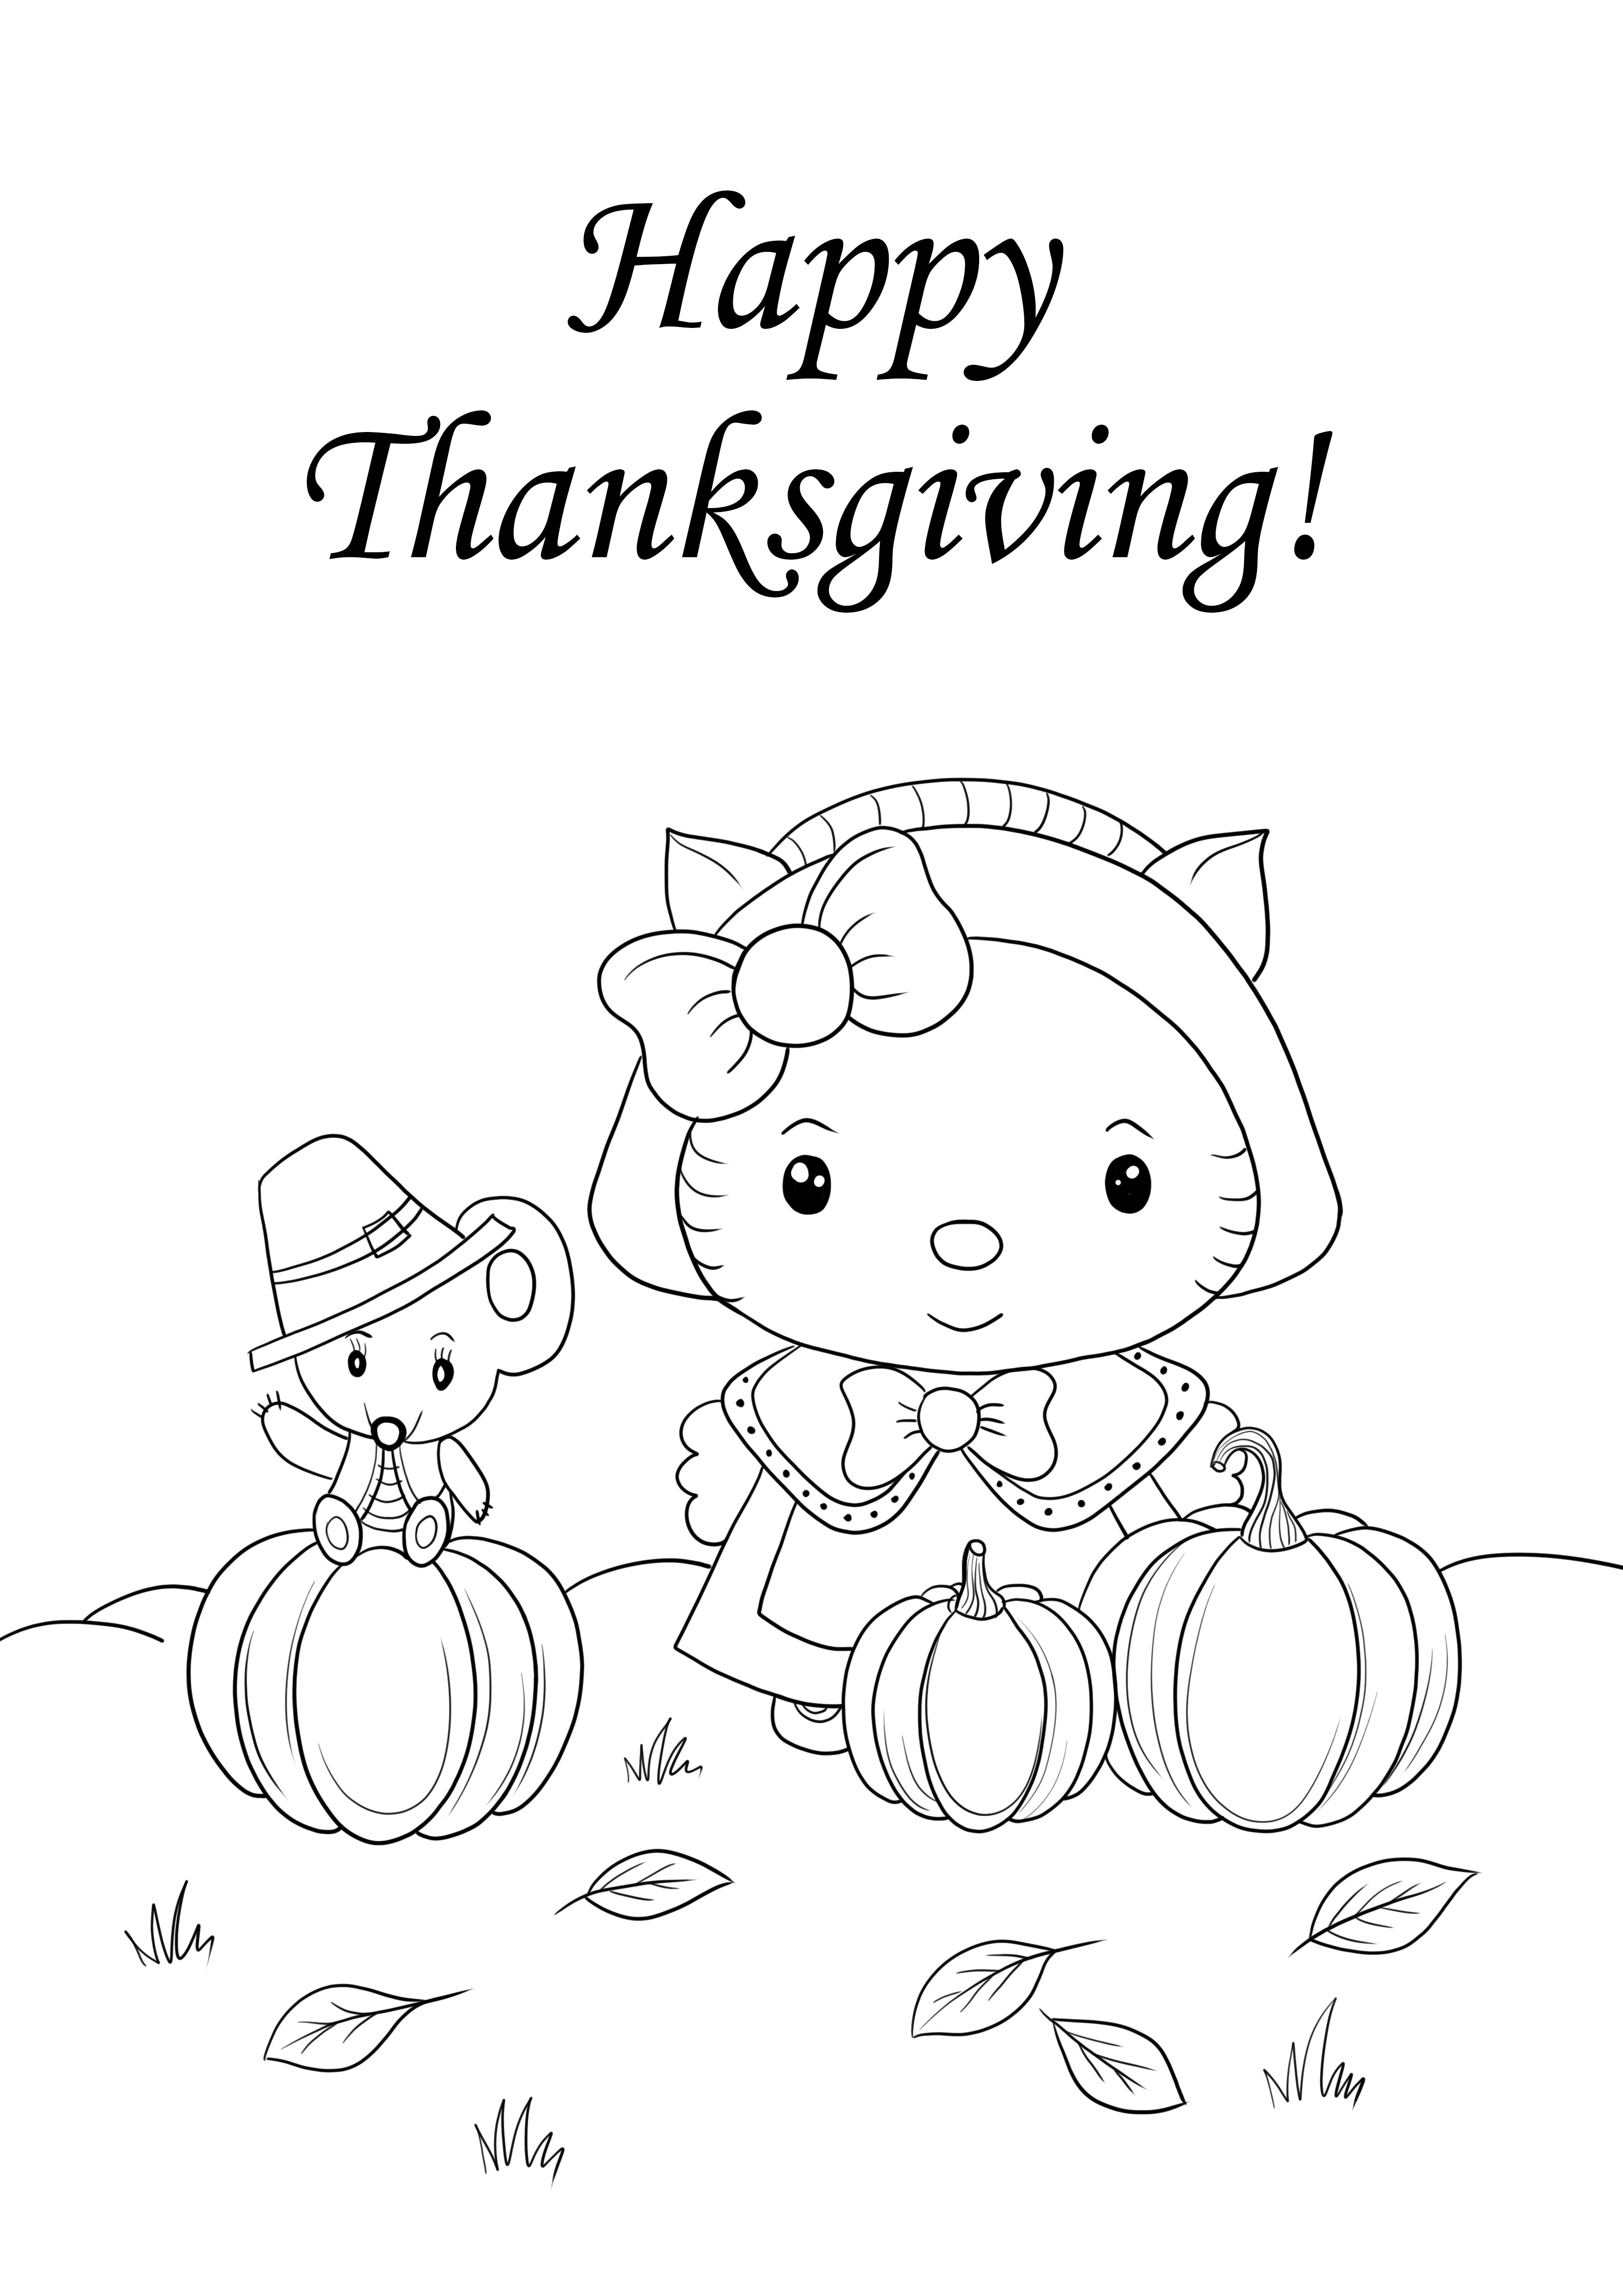 Gambar Hello Kitty dan Happy Thanksgiving untuk dicetak dan bebas warna